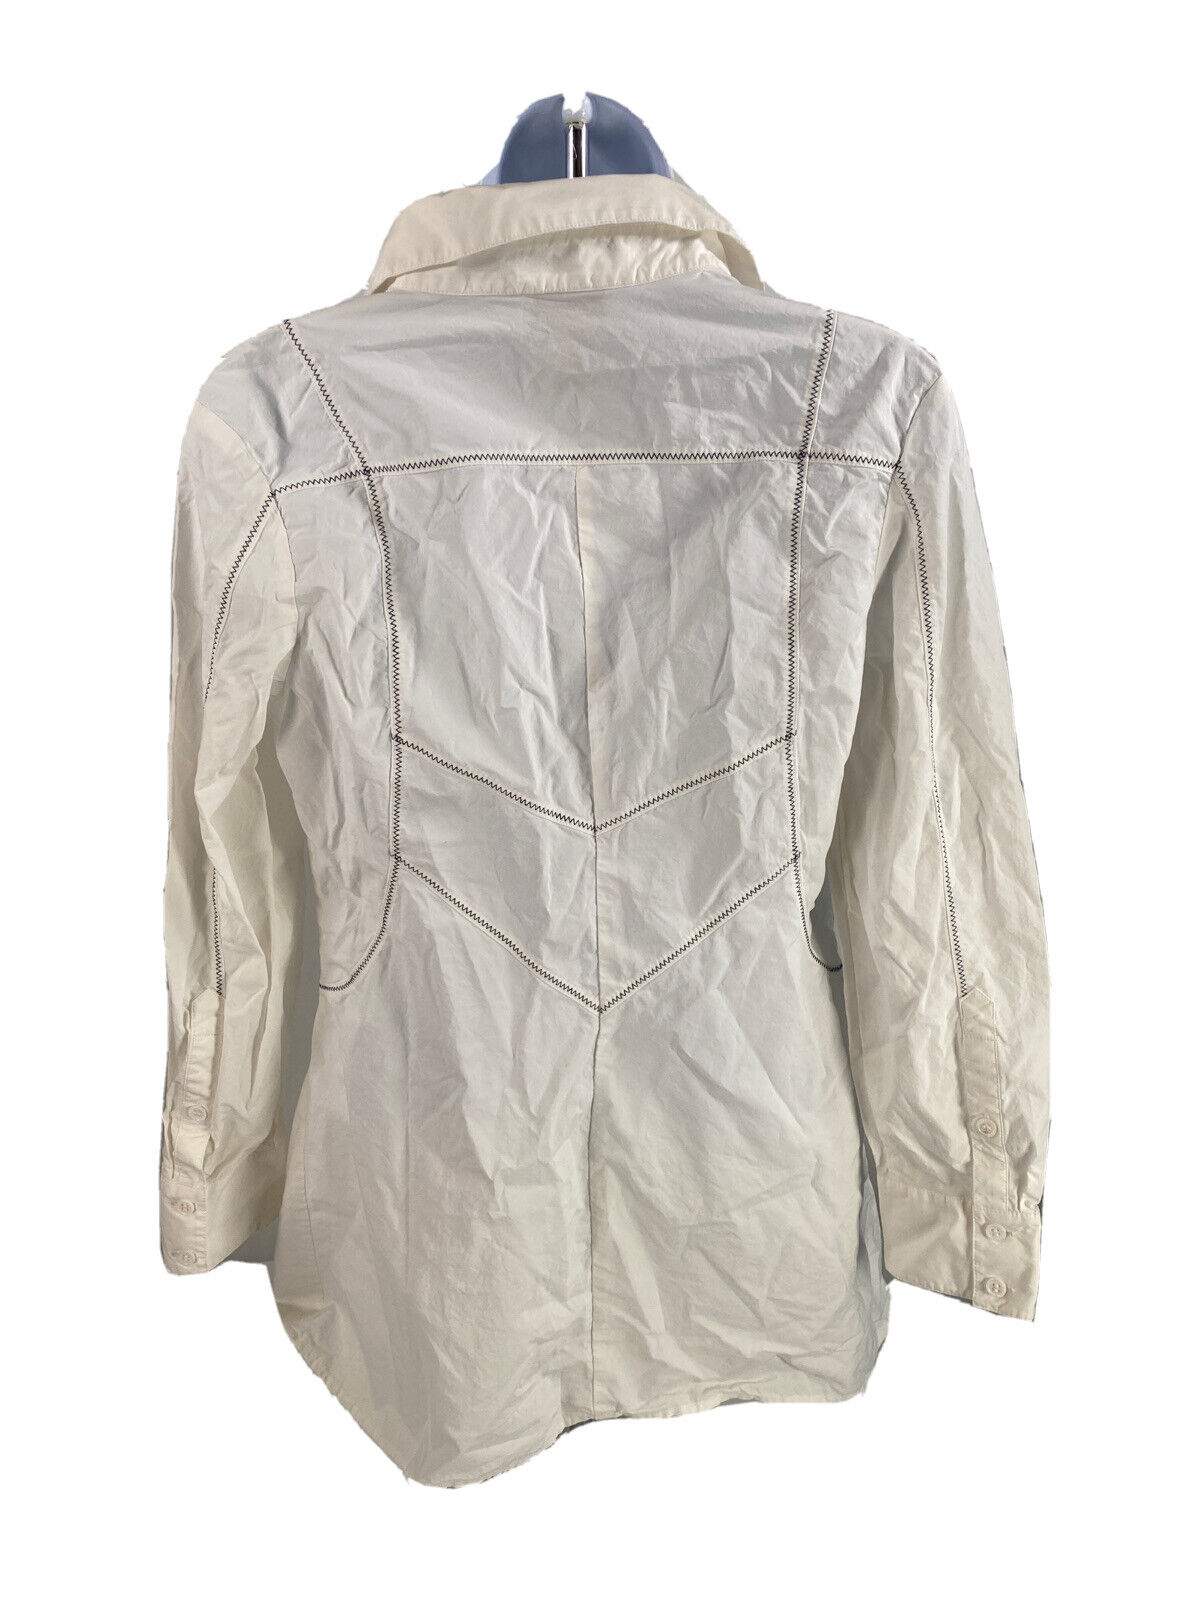 Soft Surroundings Women's White Long Sleeve Button Up Blouse - S Petite